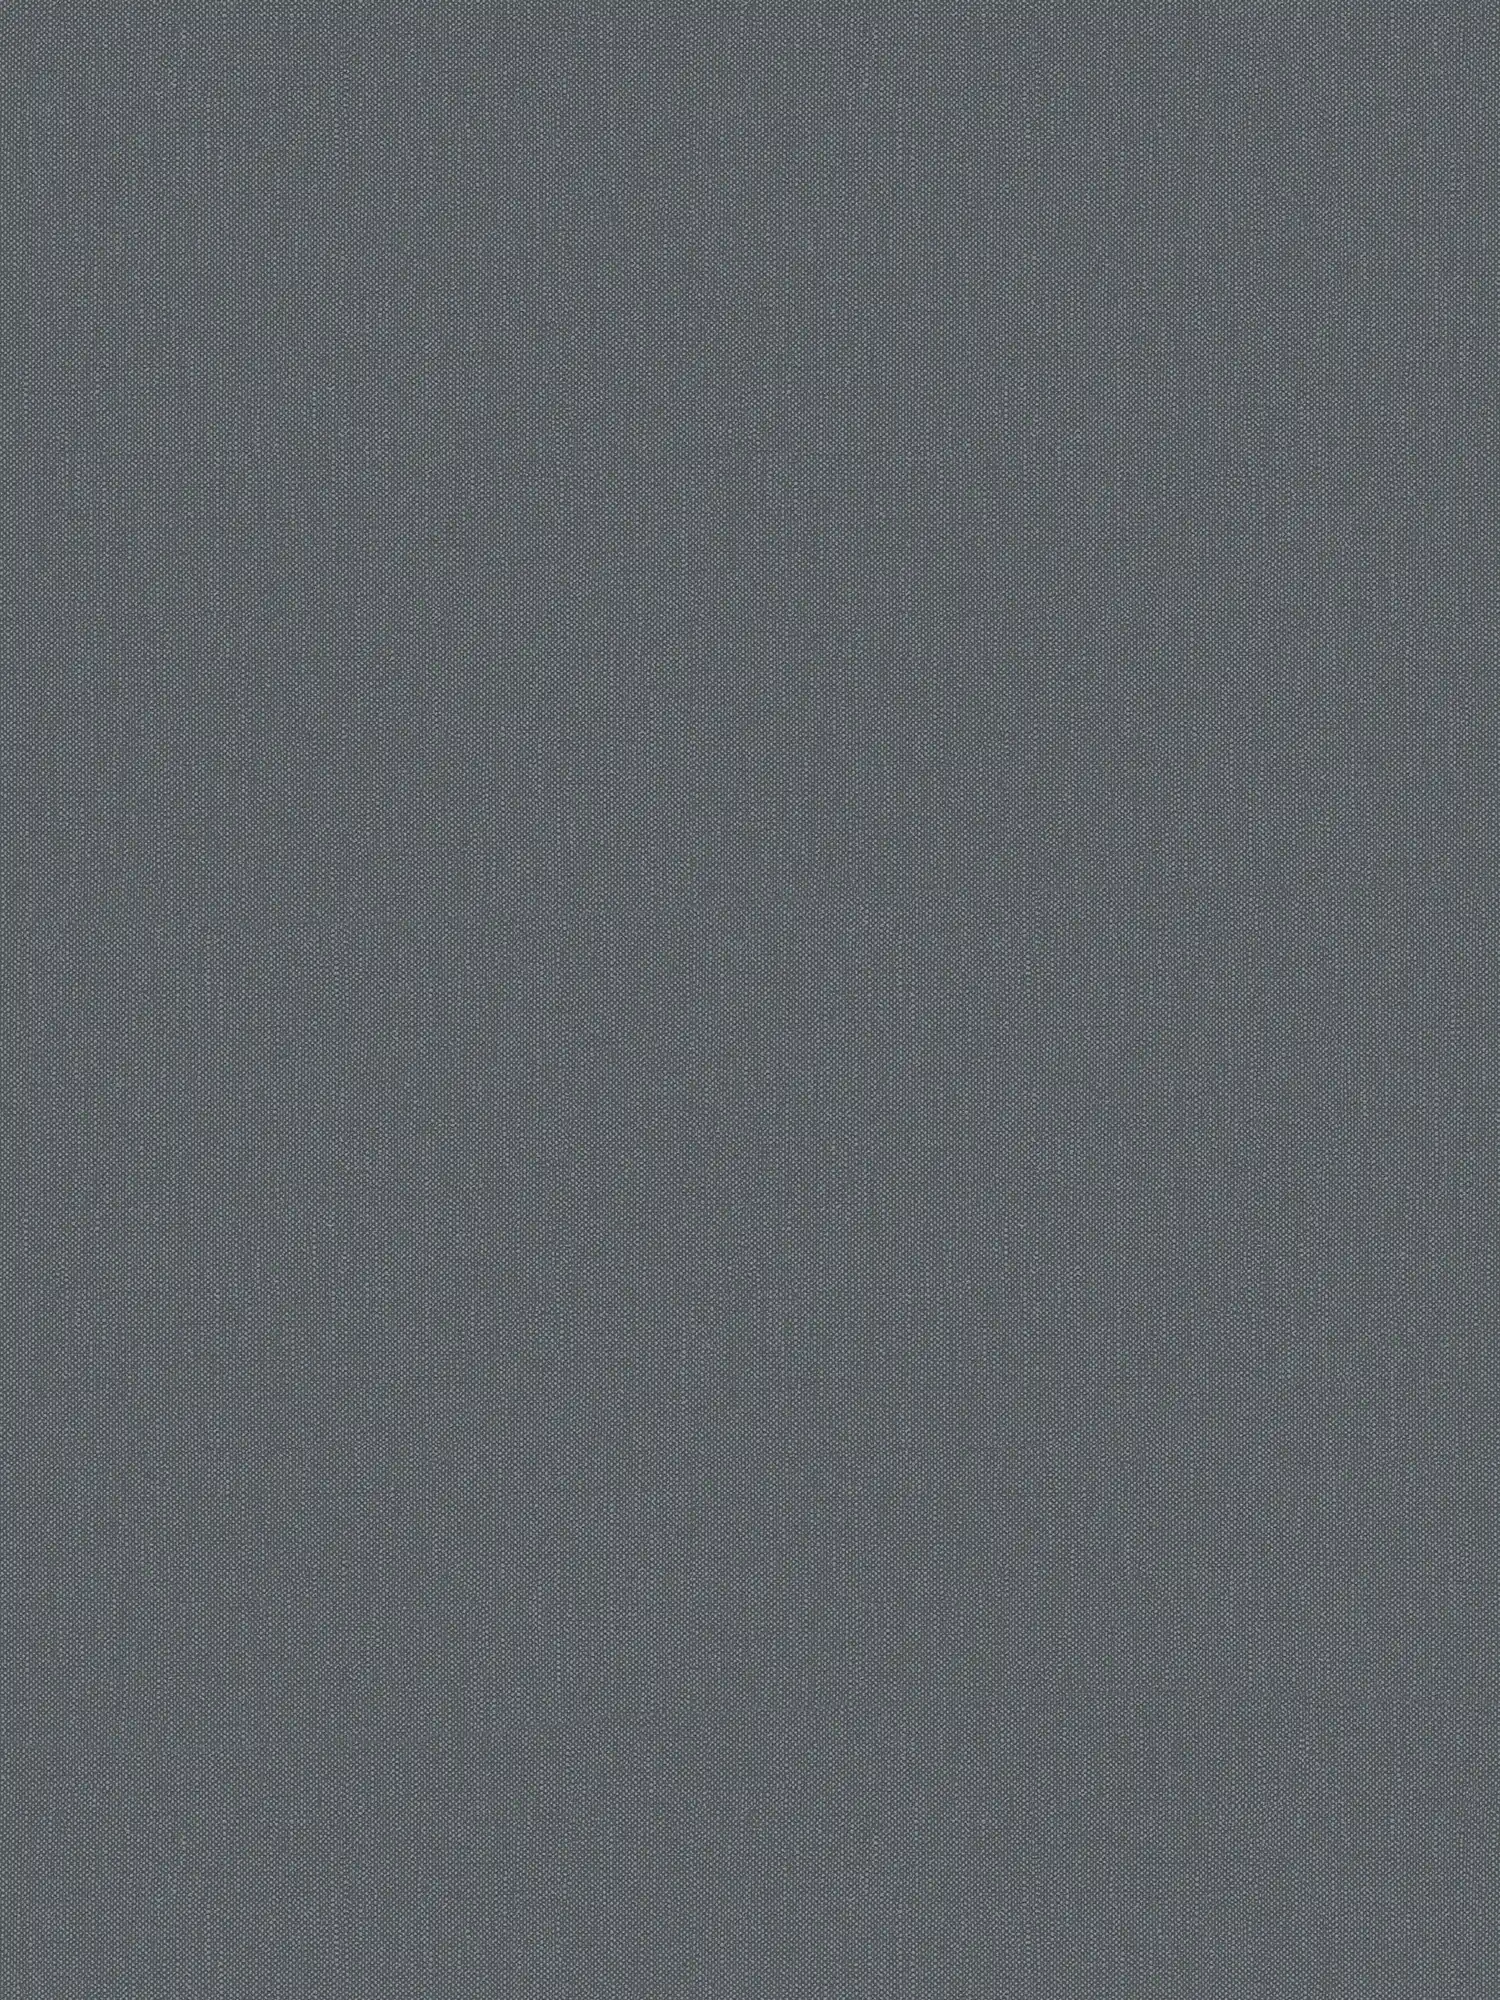 Papel pintado no tejido antracita con textura textil - gris
